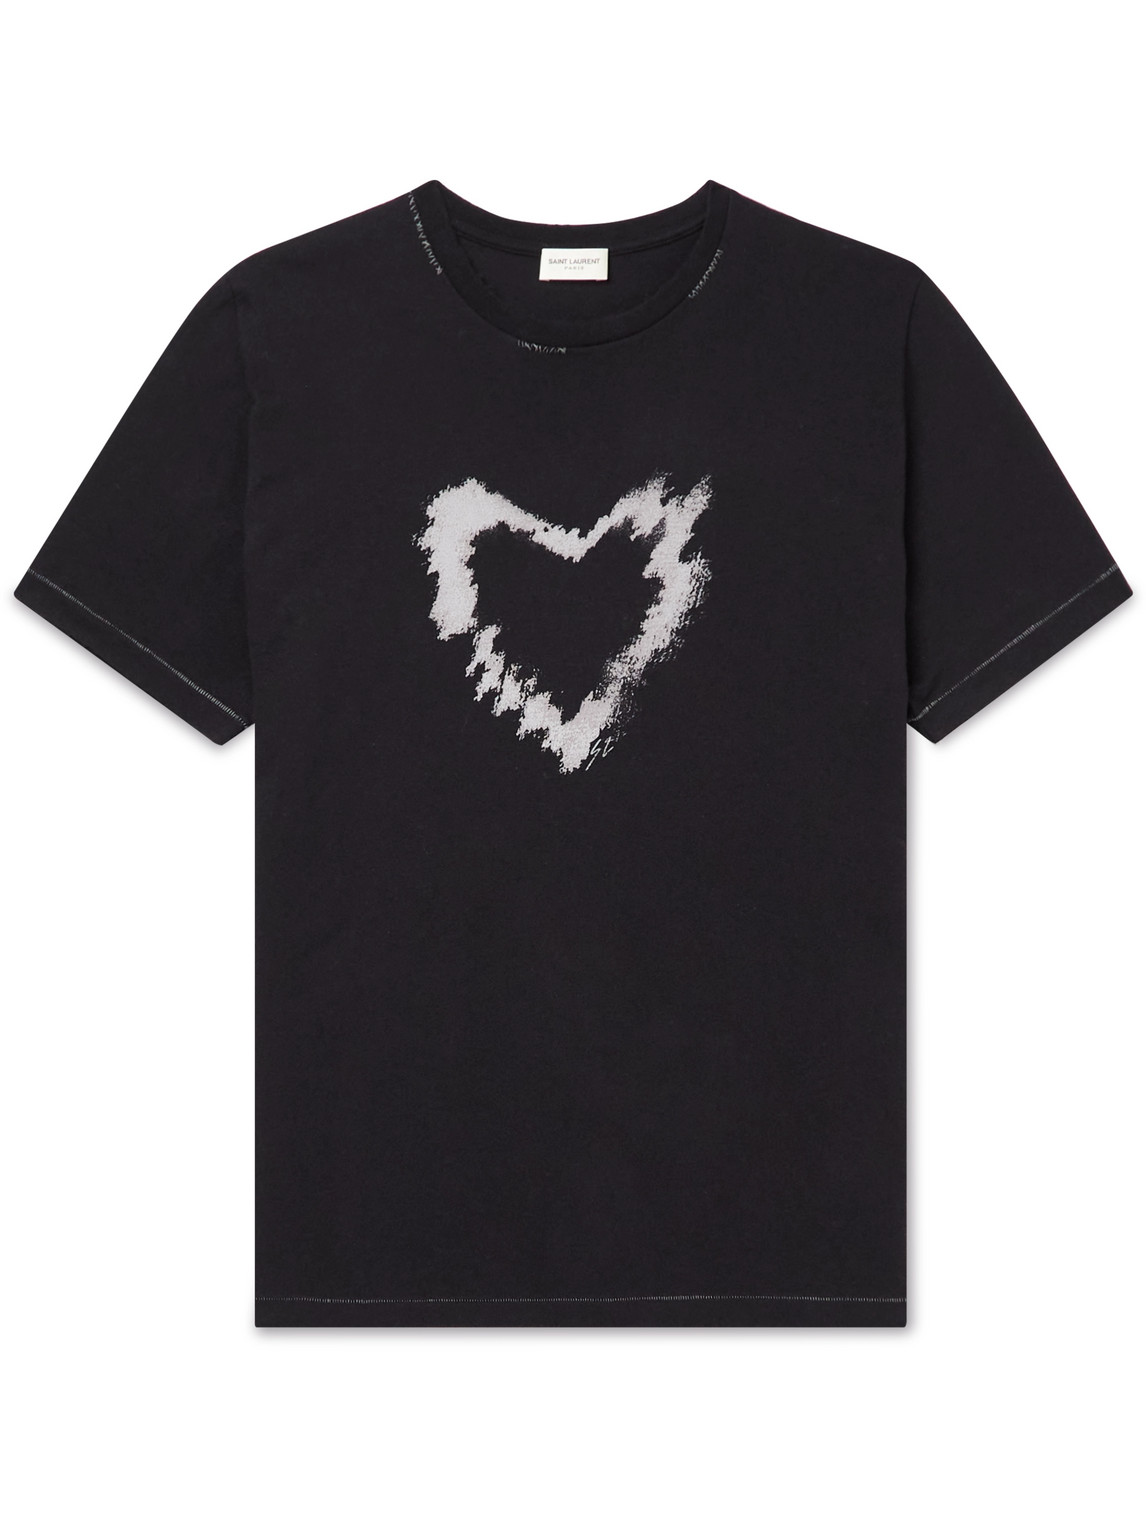 SAINT LAURENT Distressed Printed Cotton-Jersey T-Shirt